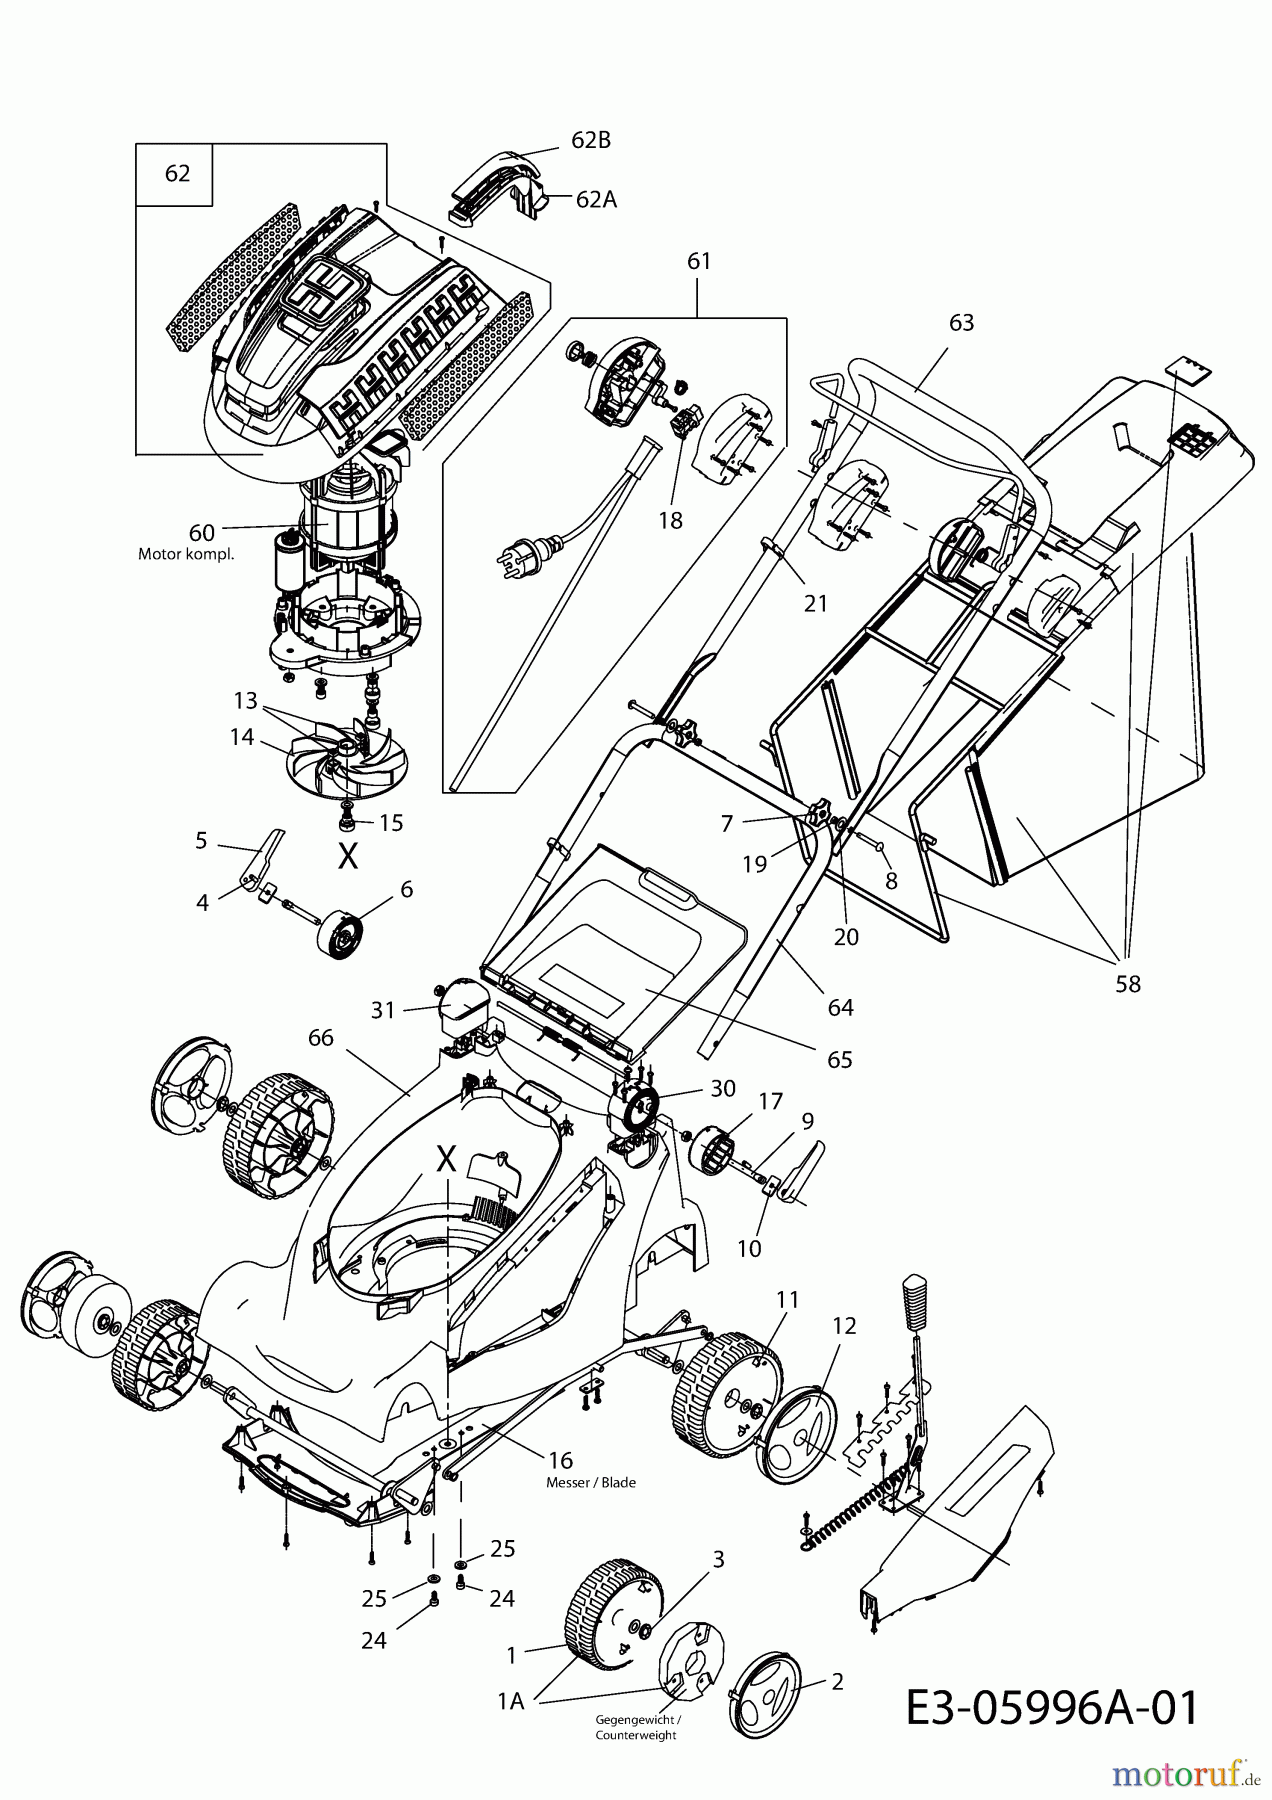  Wingart Electric mower ER 1842-1 18BCE4L2601  (2015) Basic machine